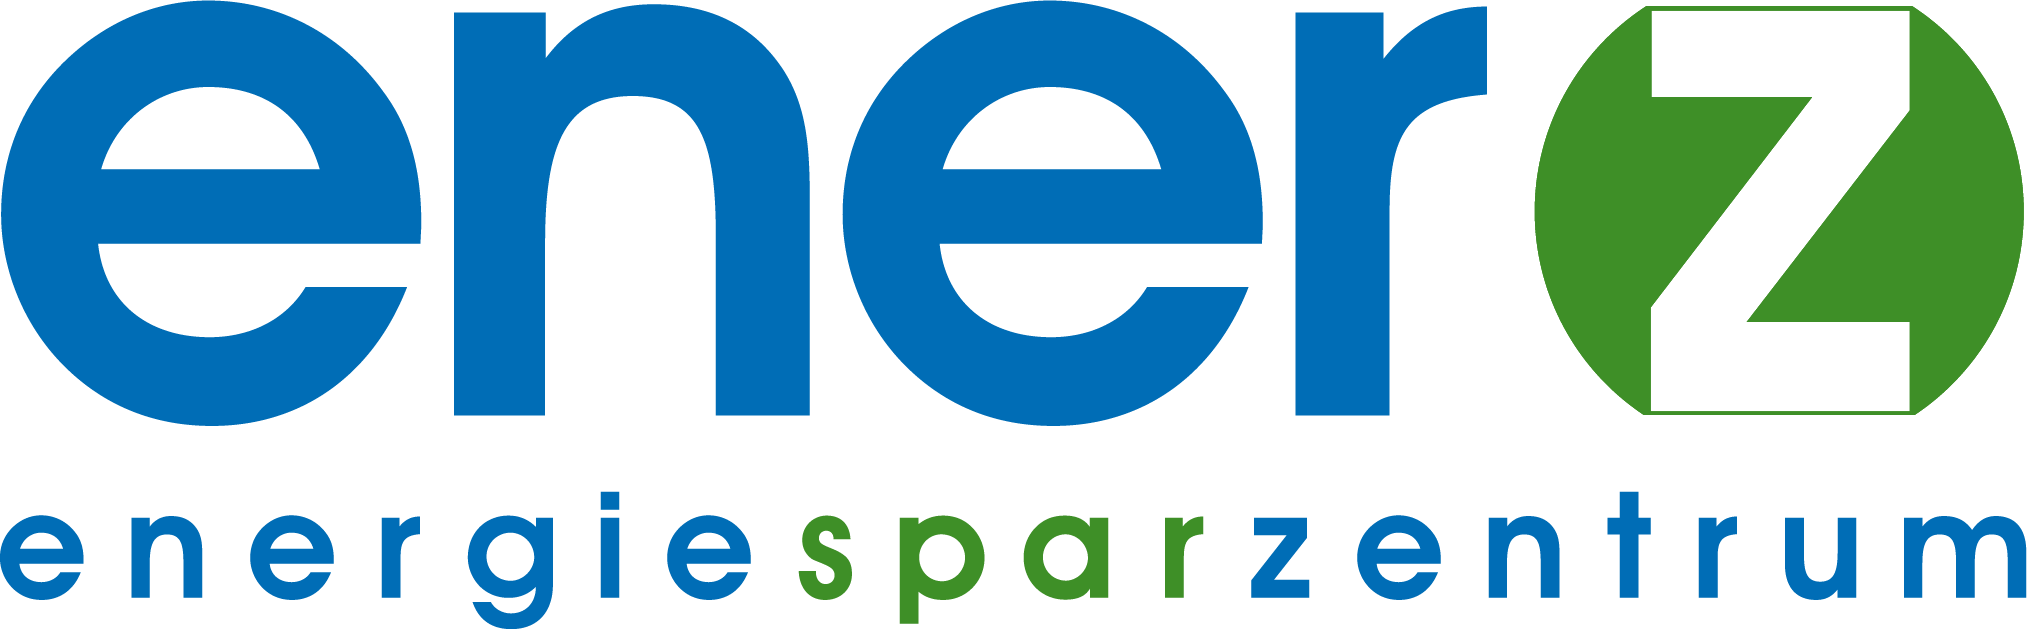 enerz logo